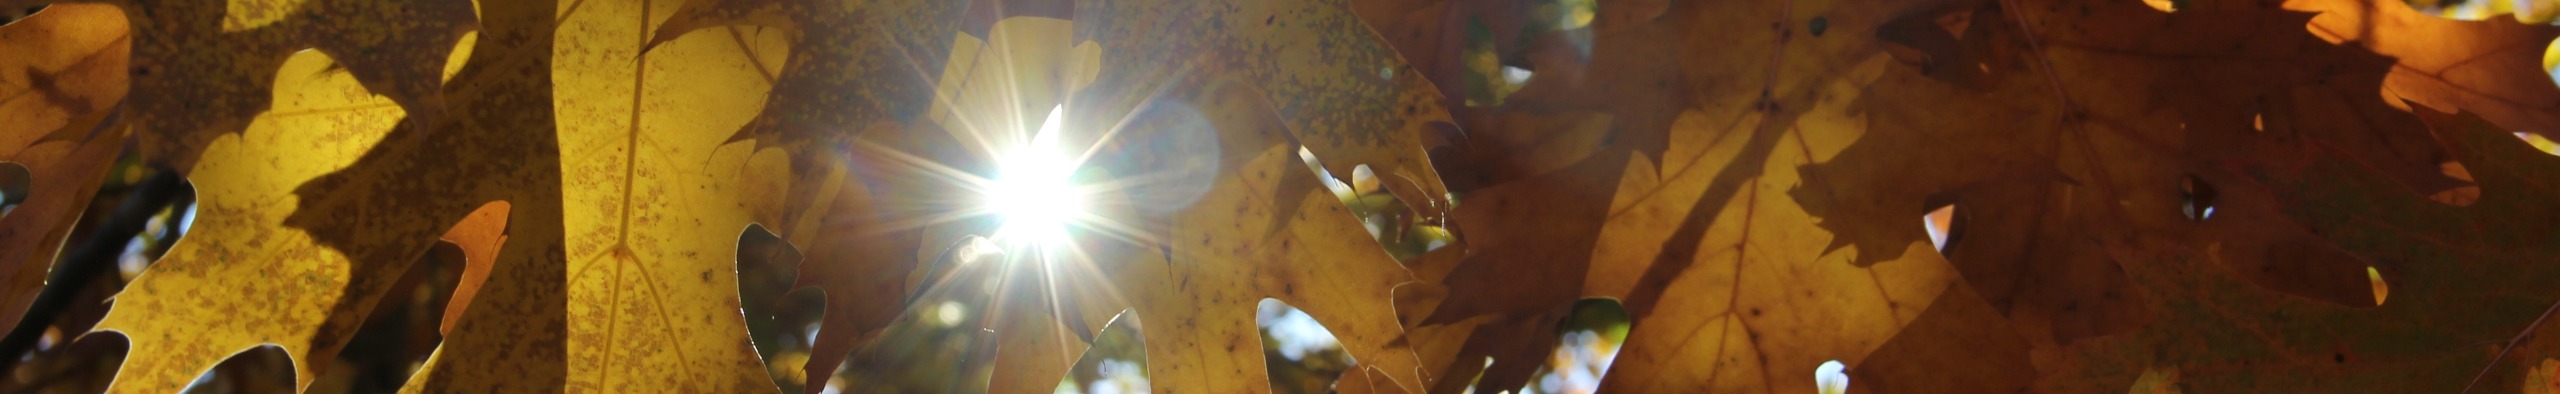 sun through leaves in fall